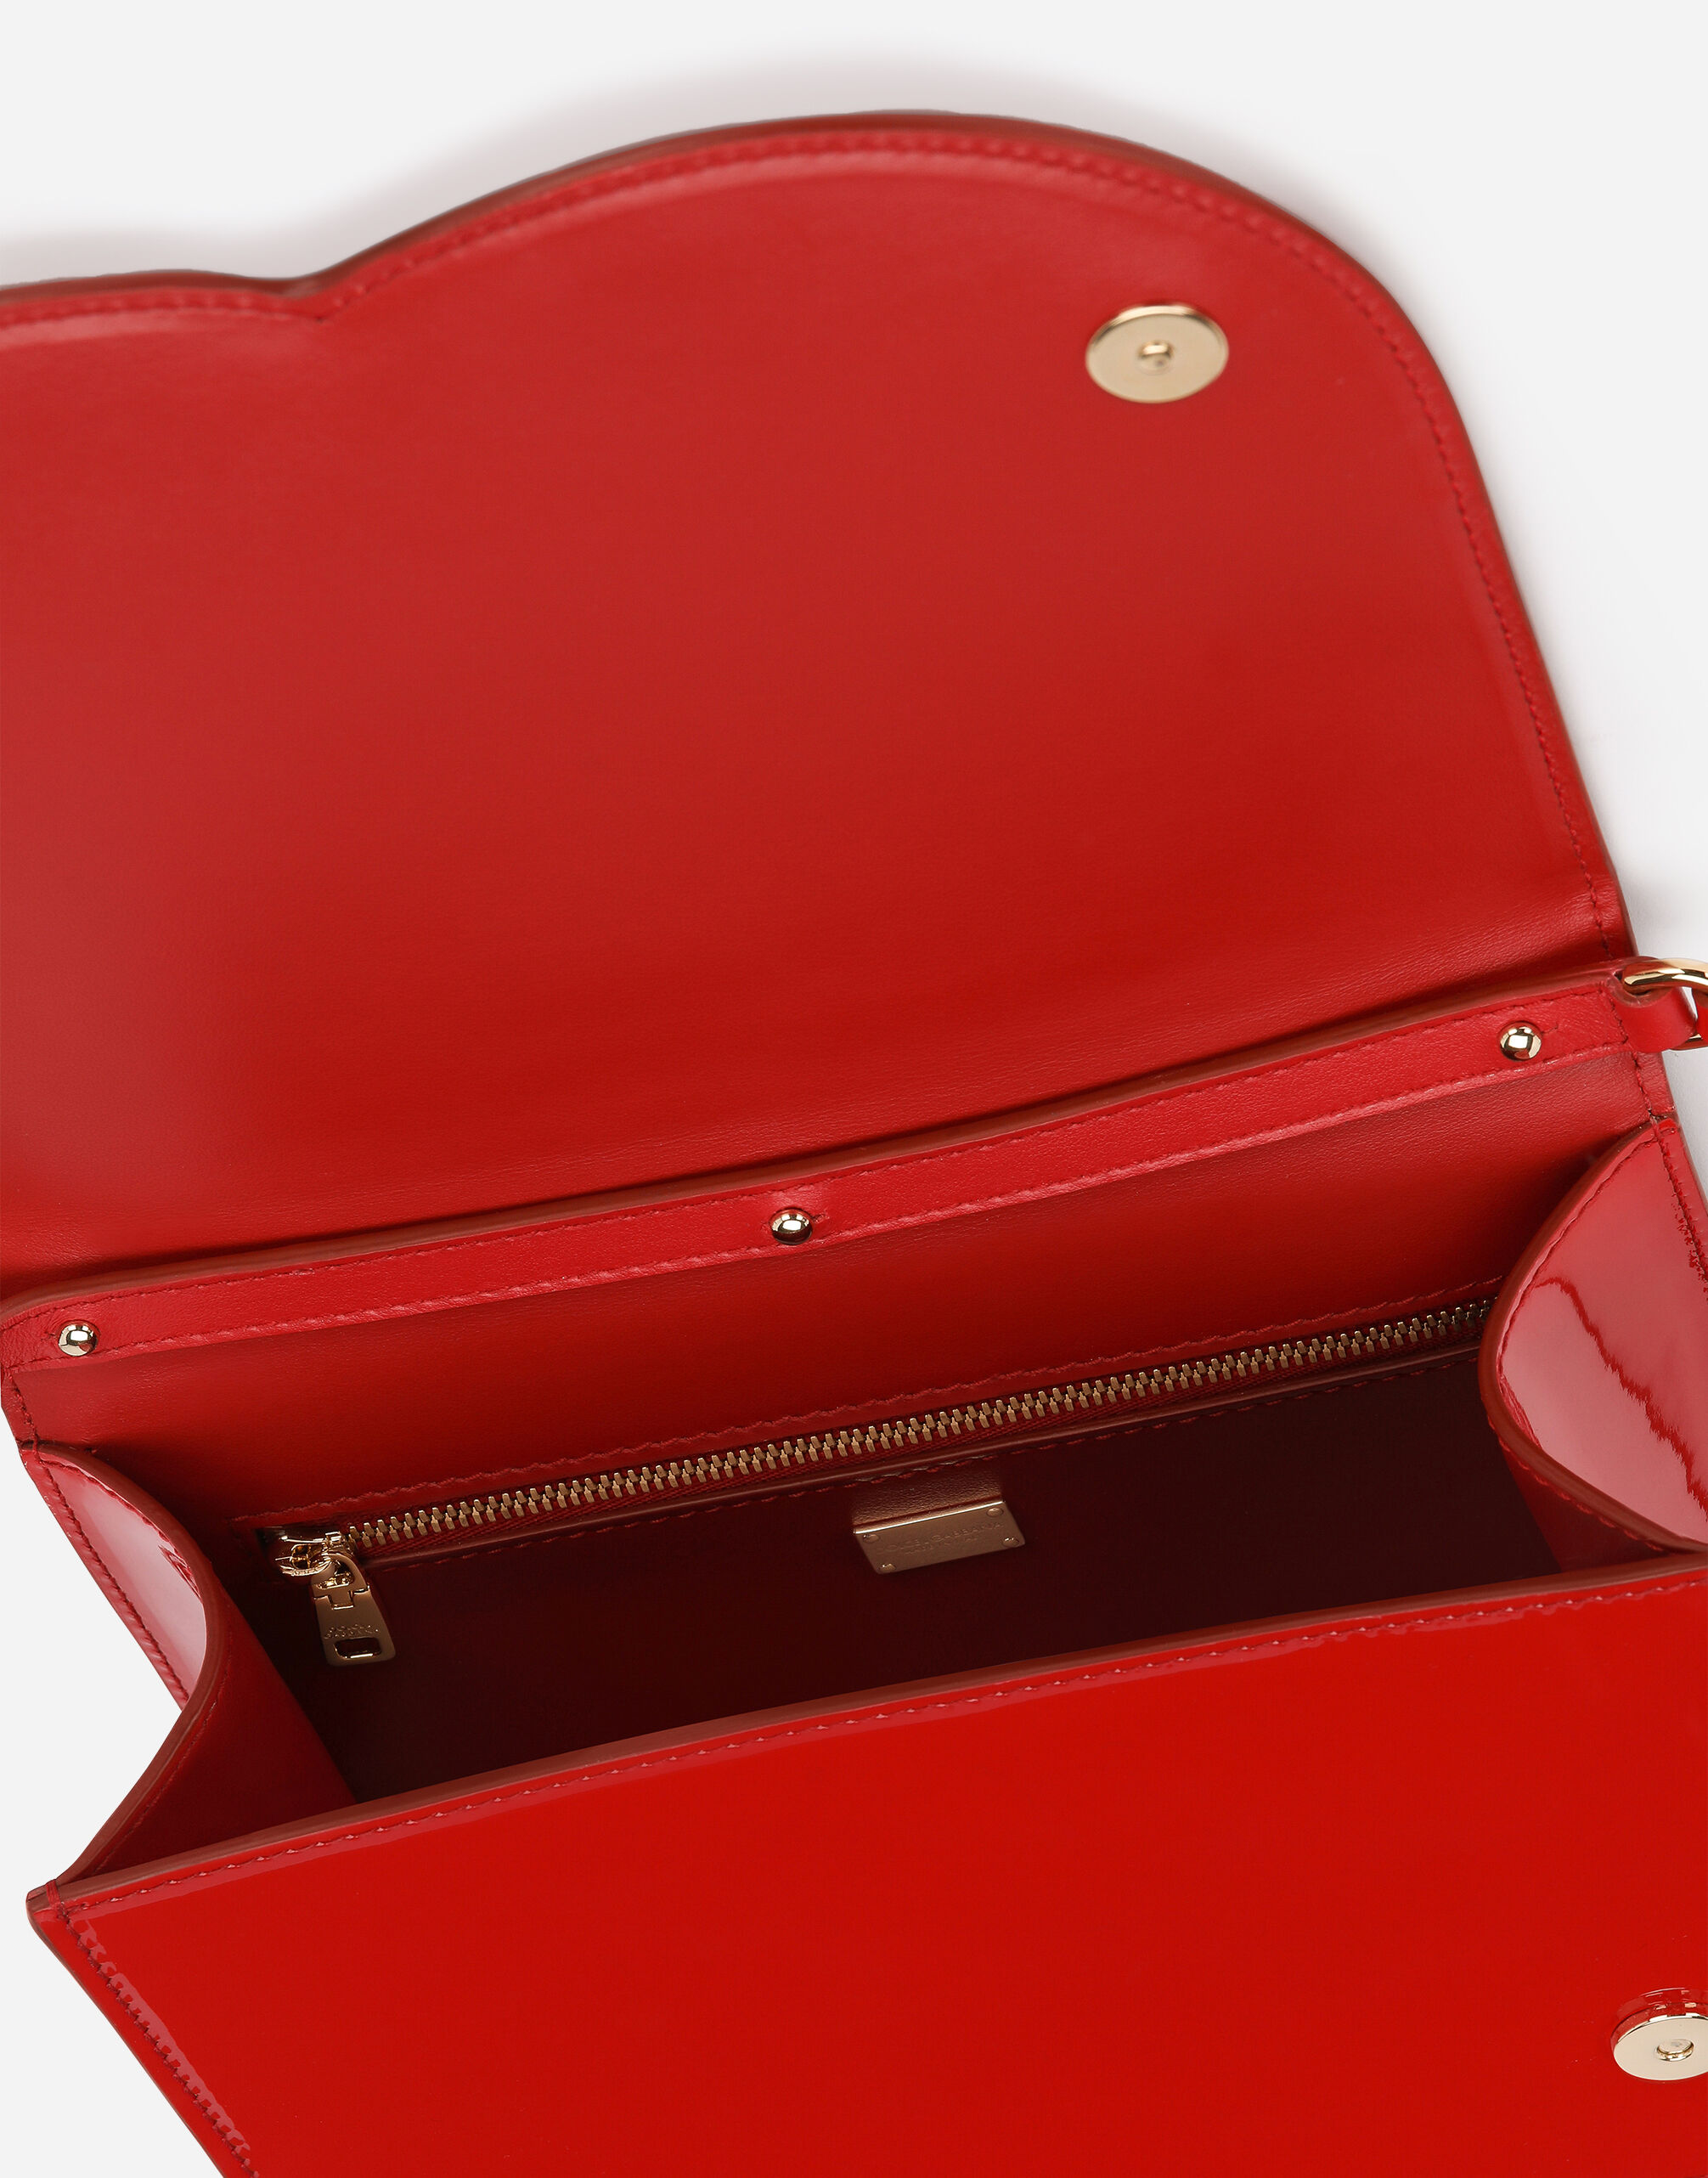 Dolce & Gabbana Multi-Colour Sicily Love Bag